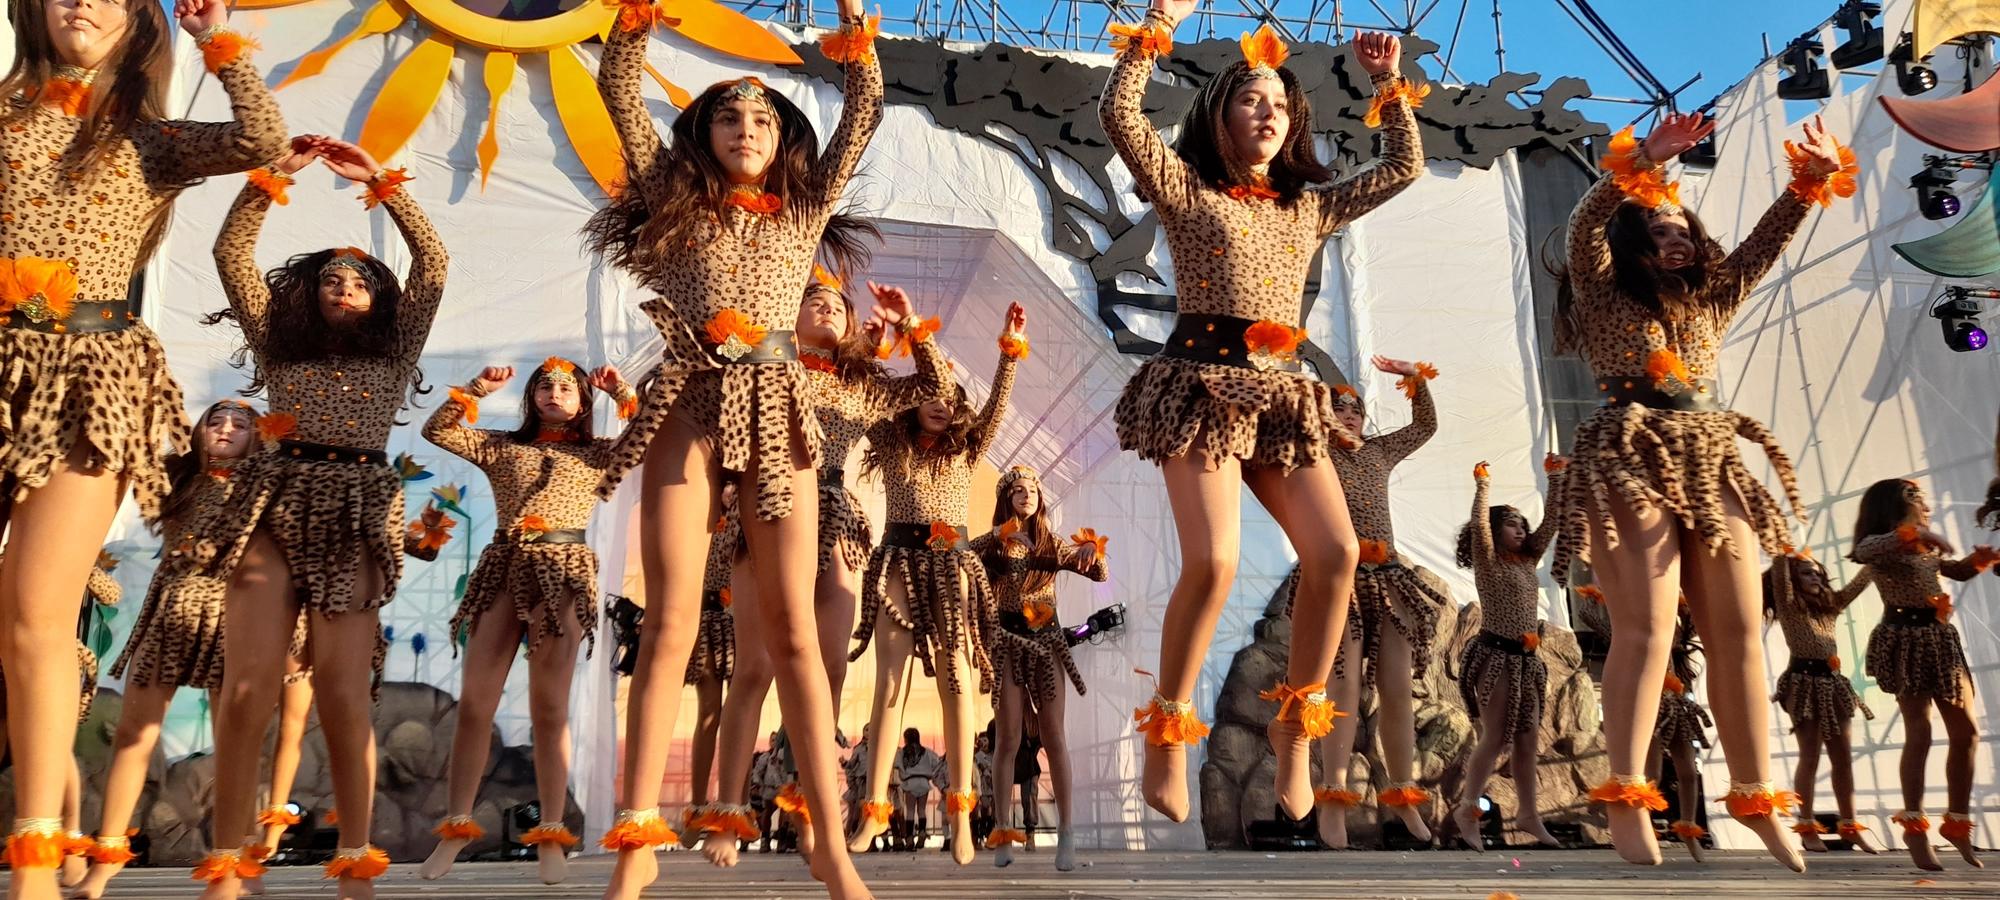 Gala infantil de reinas y reyes en el Carnaval de Vinaròs 2023.jpg